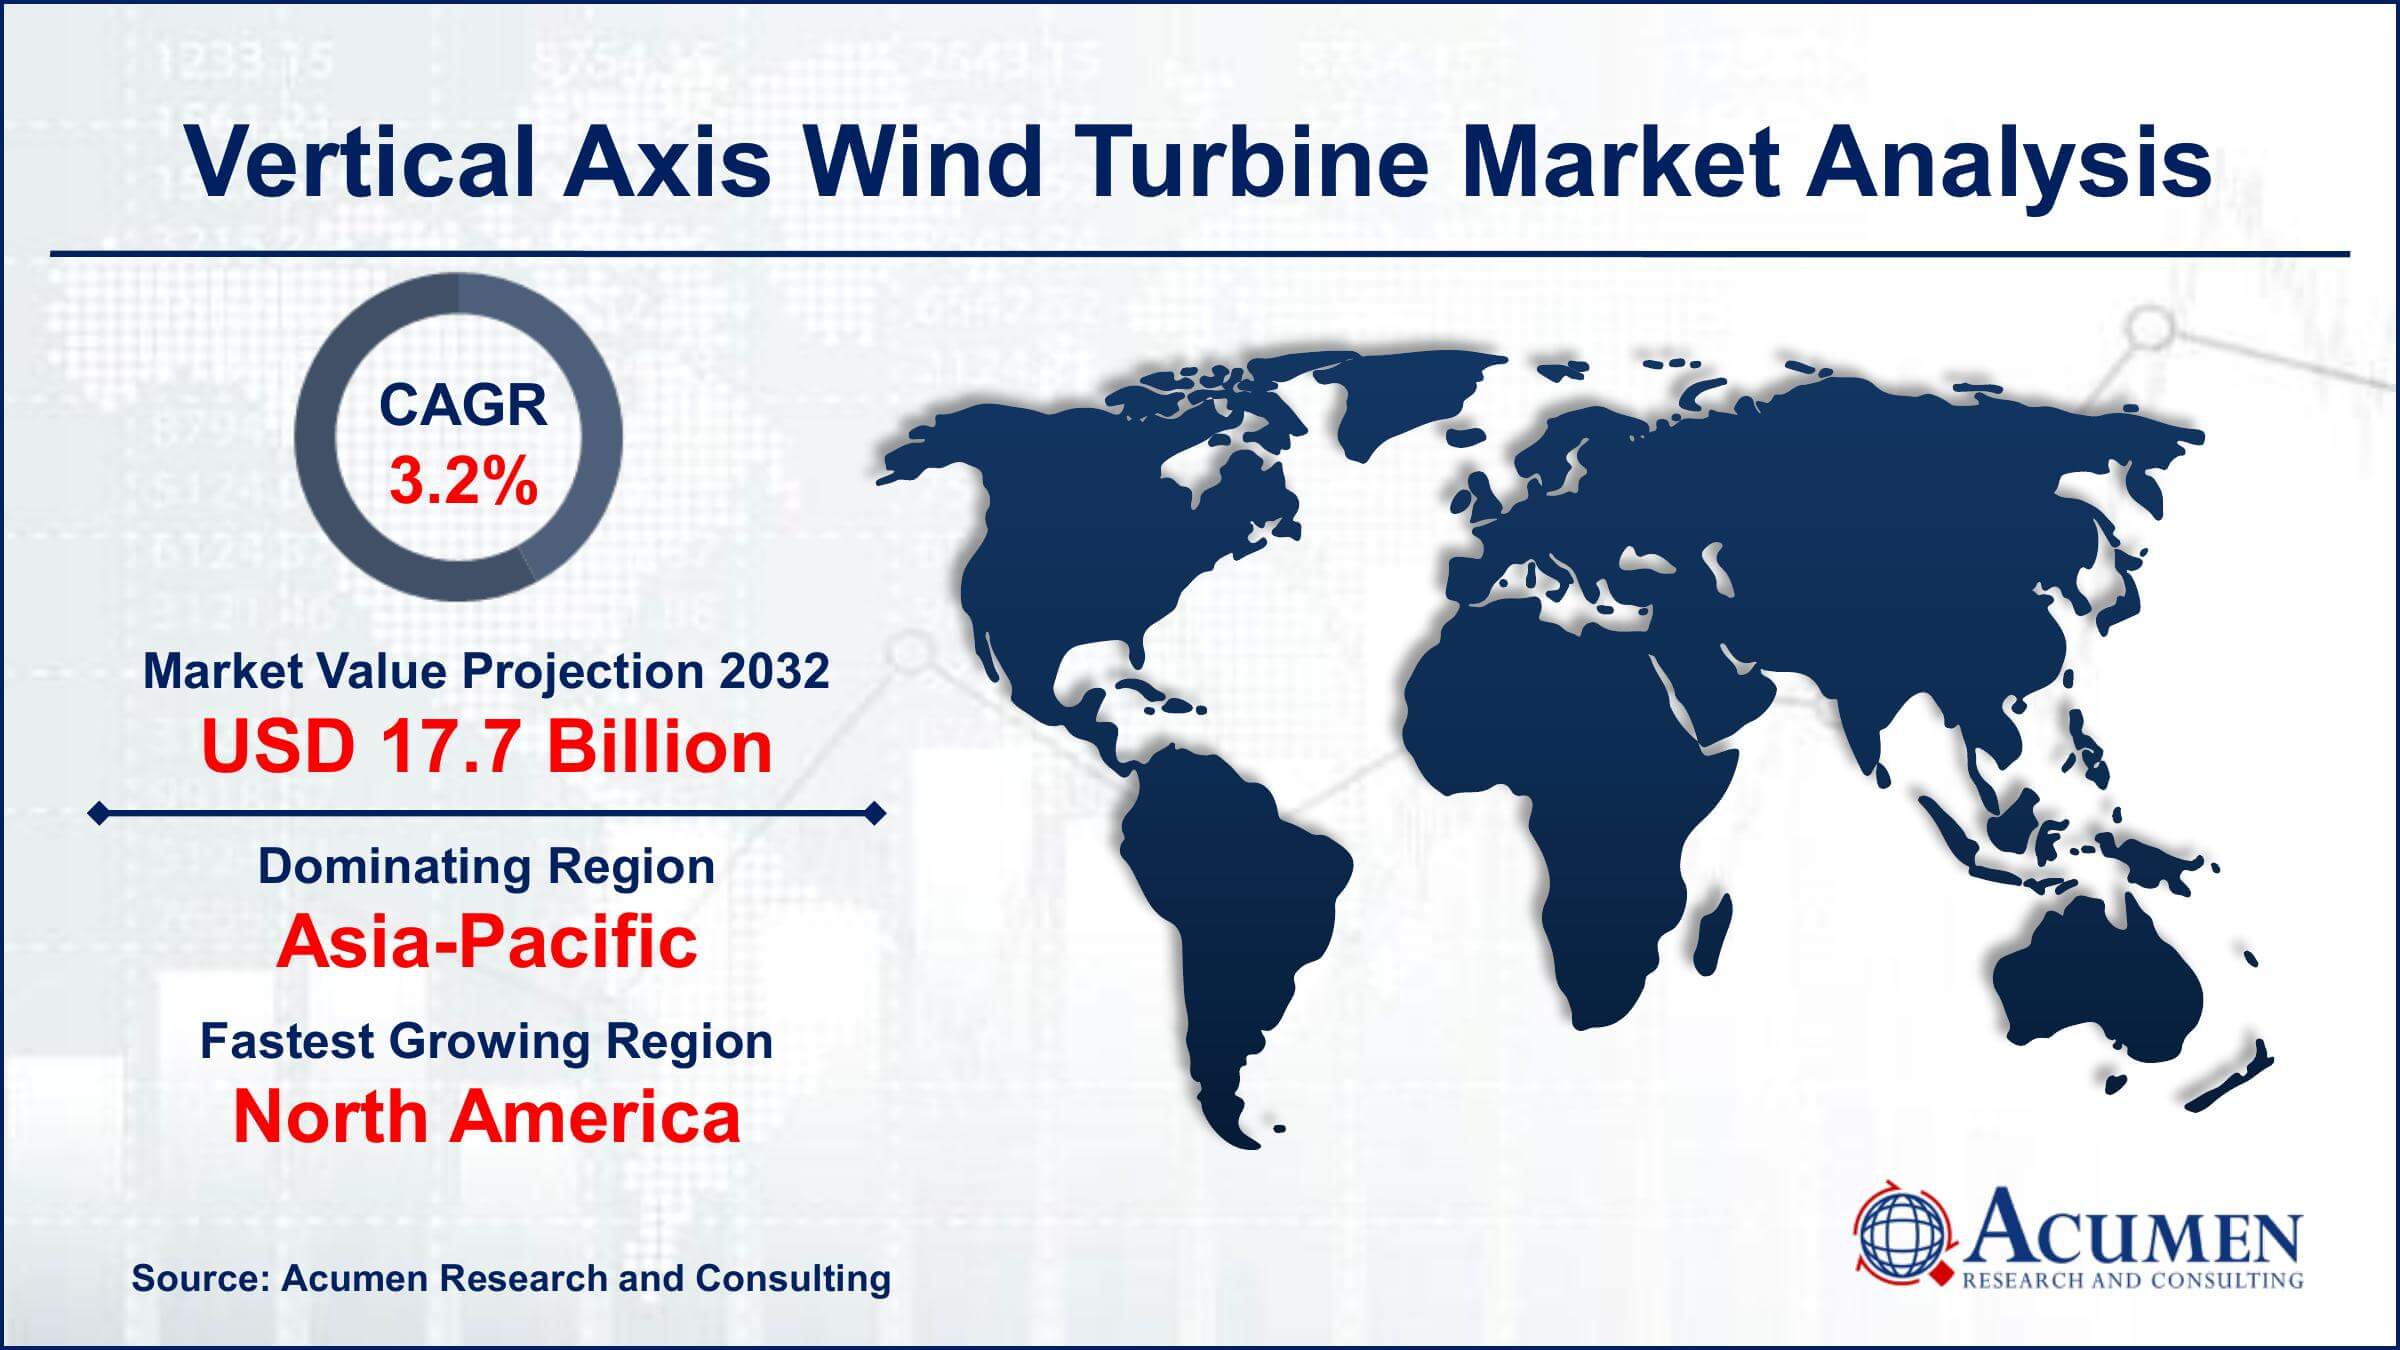 Global Vertical Axis Wind Turbine Market Trends